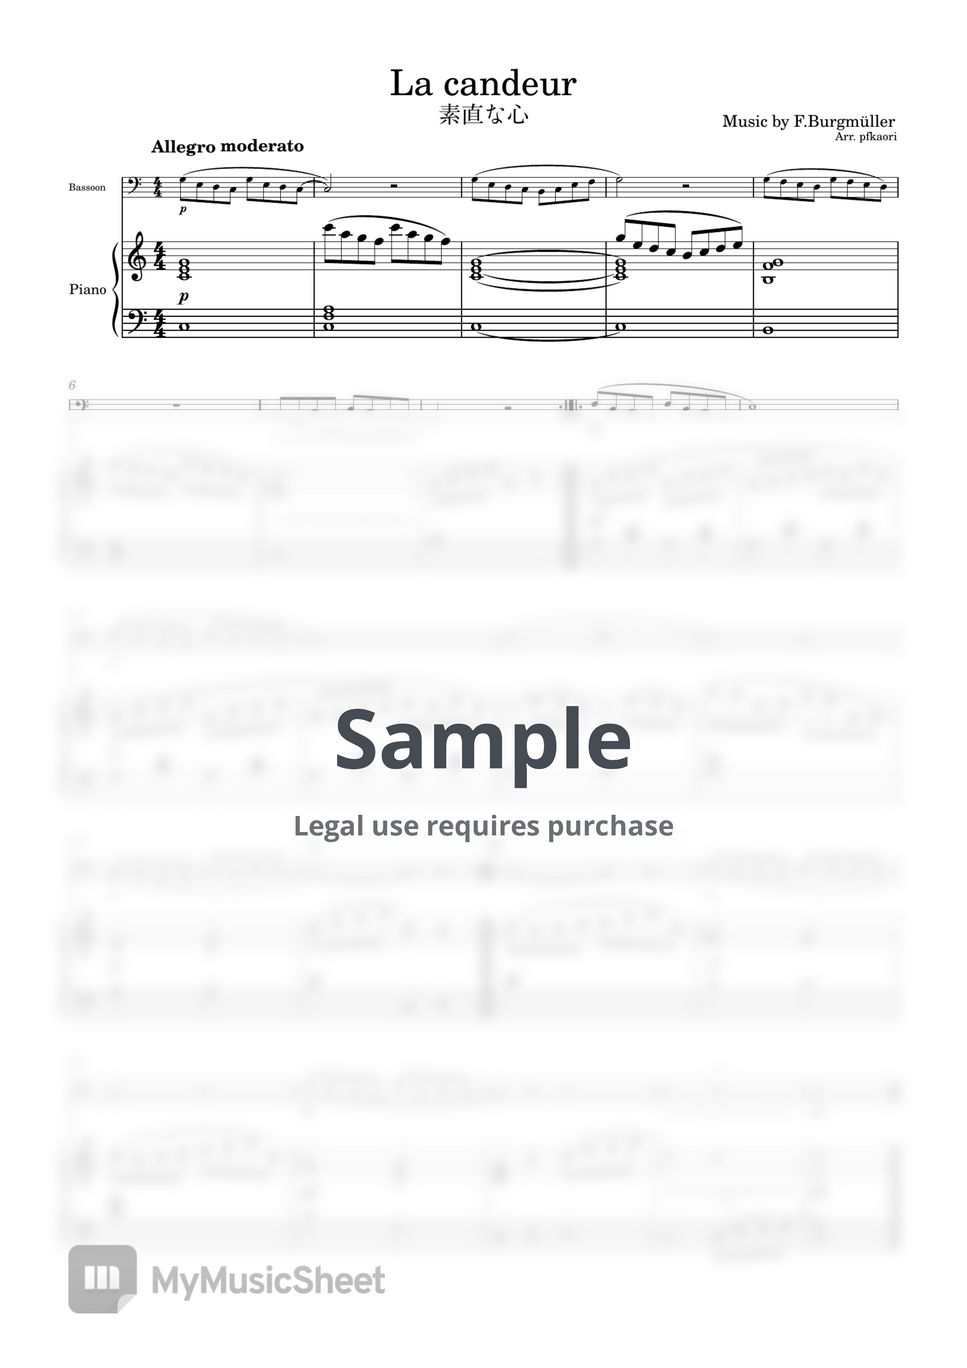 Burgmüller - La candeur (Bassoon & piano) by pfkaori